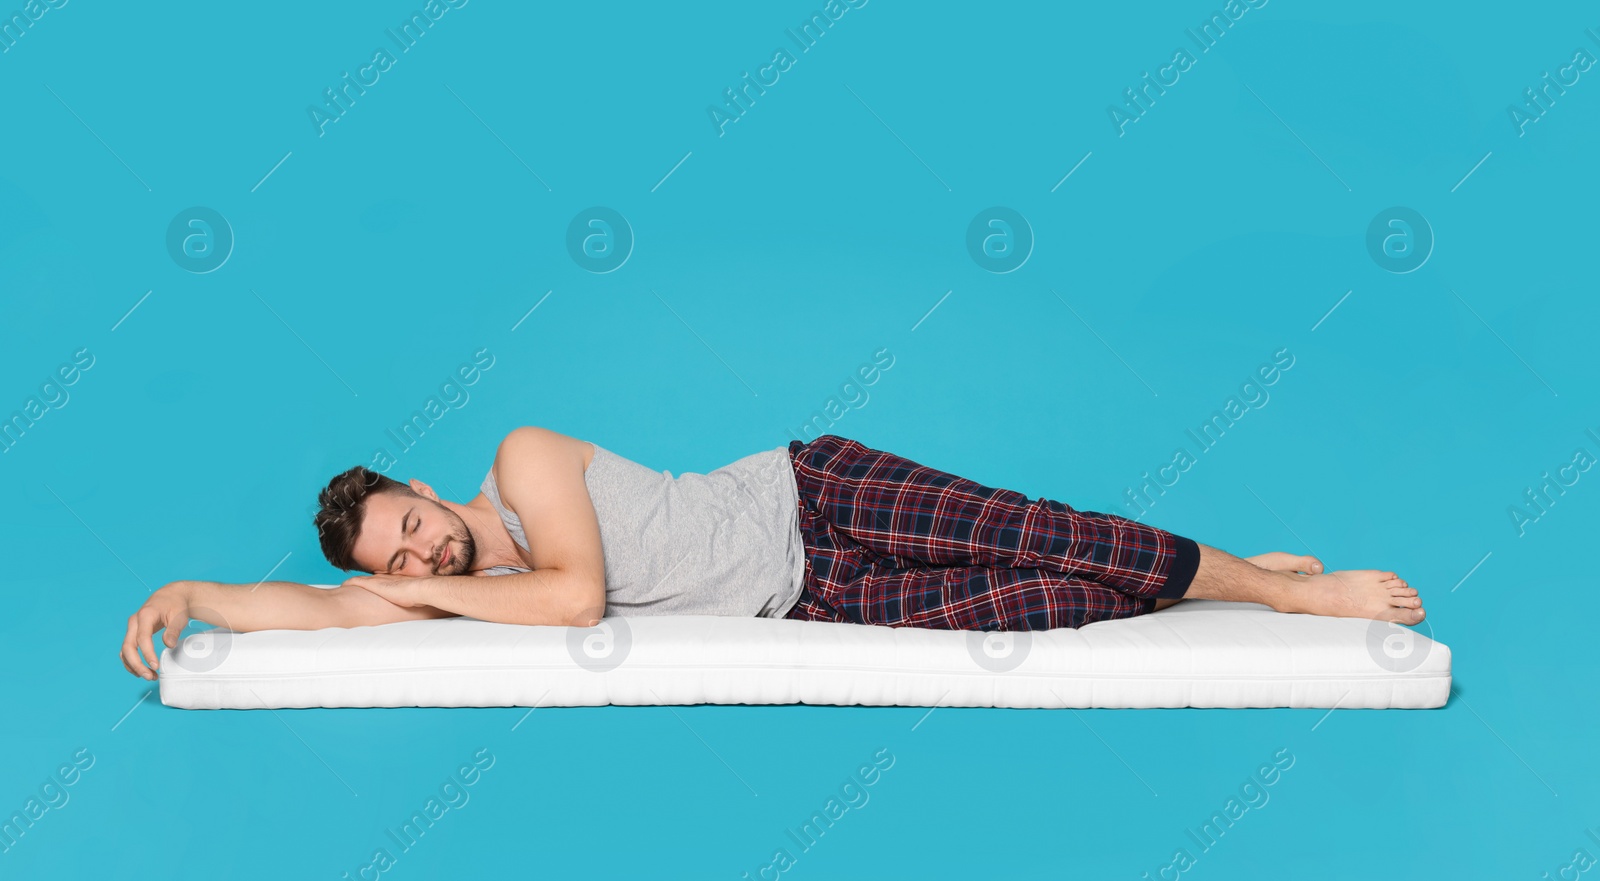 Photo of Man sleeping on soft mattress against light blue background